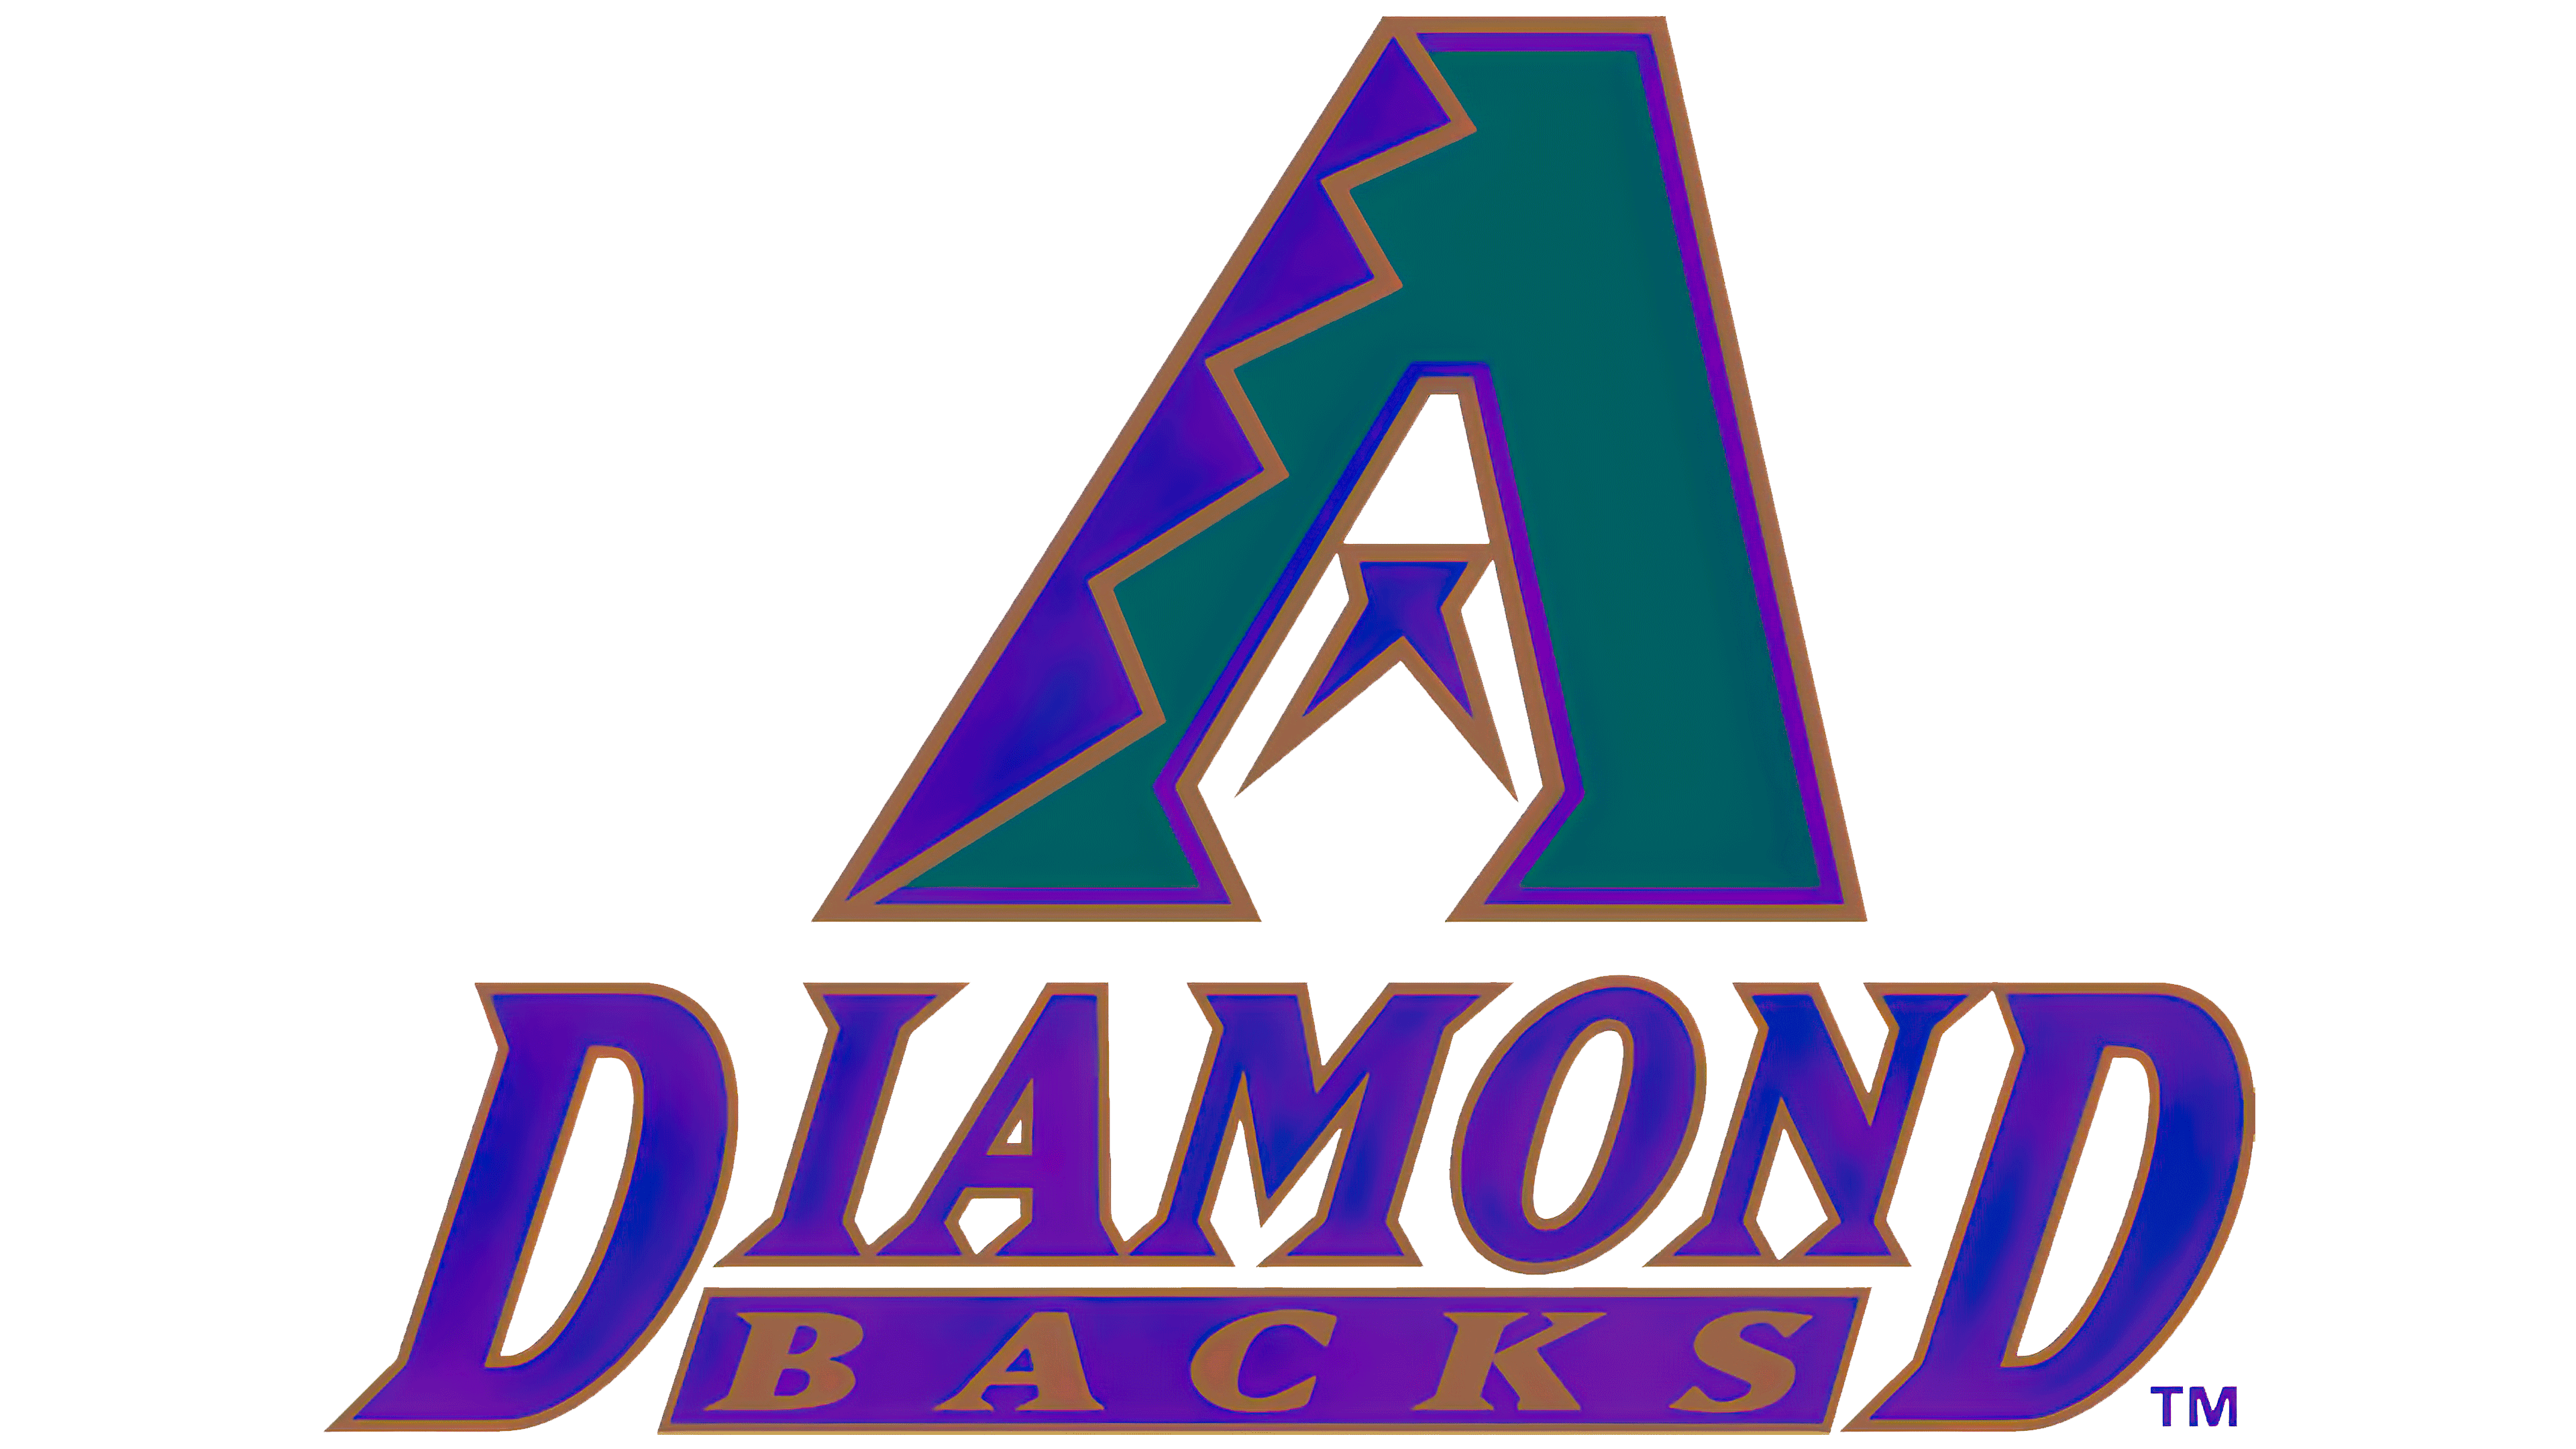 Arizona Diamondbacks Background PNG Image